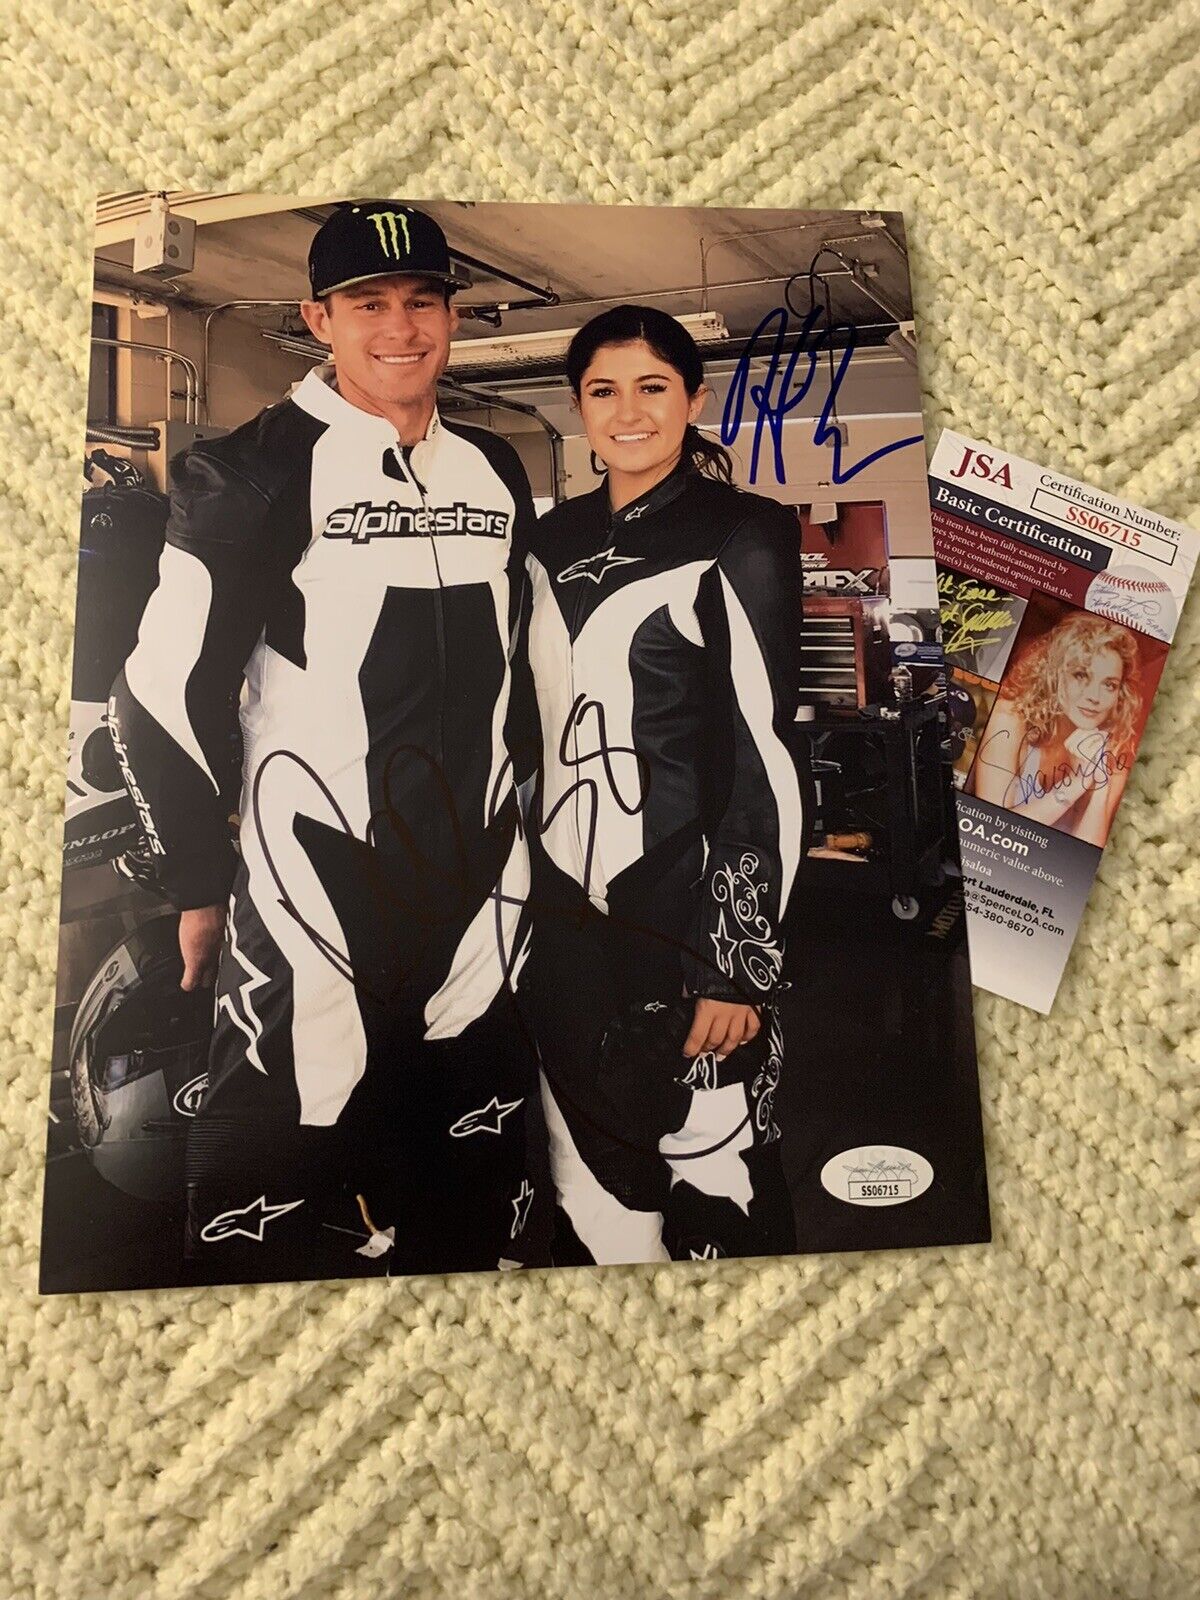 Brian & Hailie Deegan NASCAR Signed 8 X 10 Photo JSA Authenticated Autograph COA